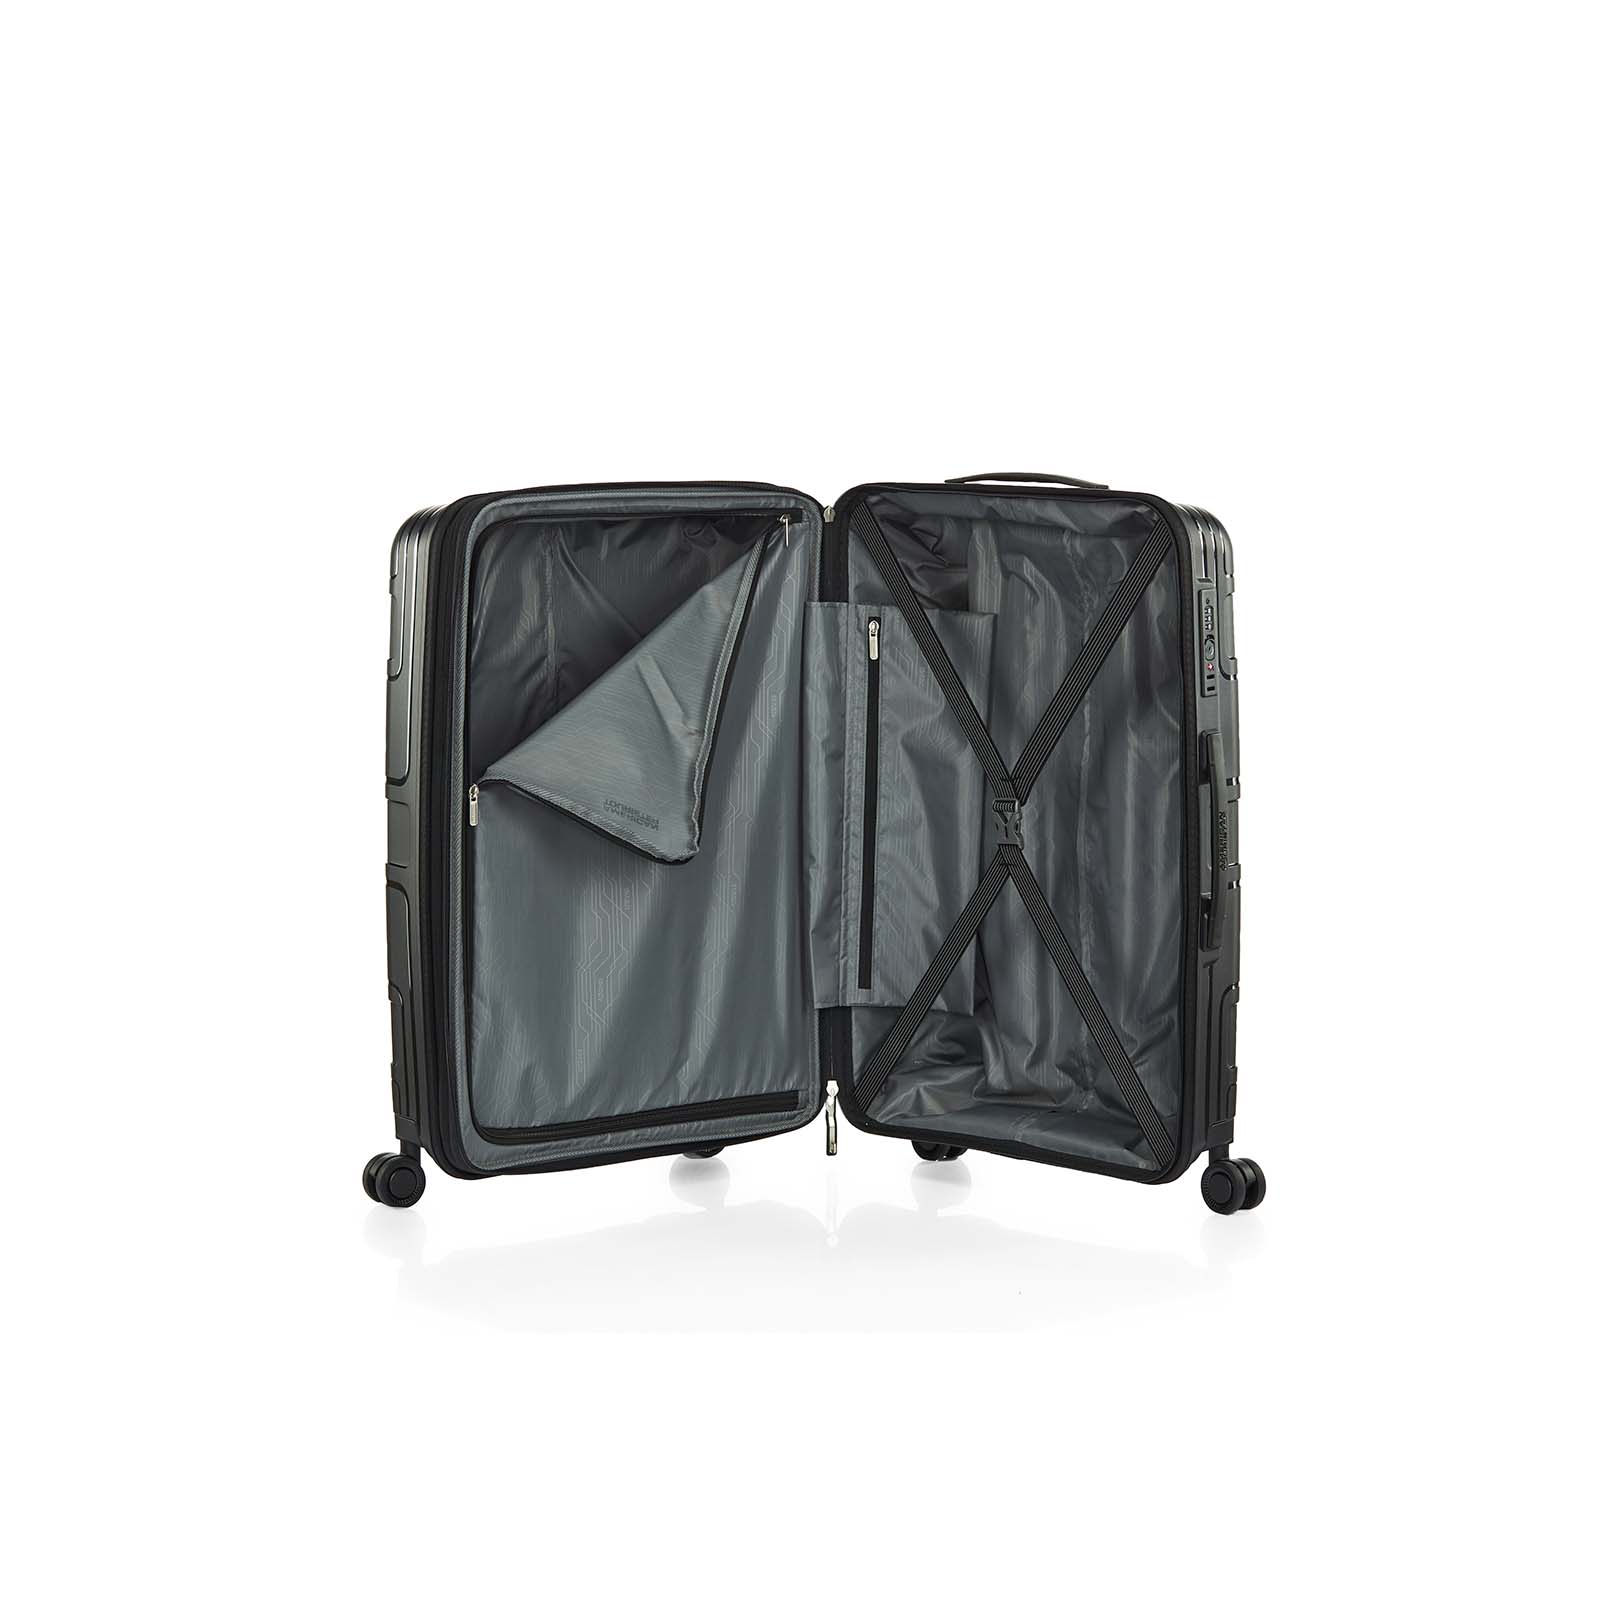 American-Tourister-Light-Max-69cm-Suitcase-Black-Open